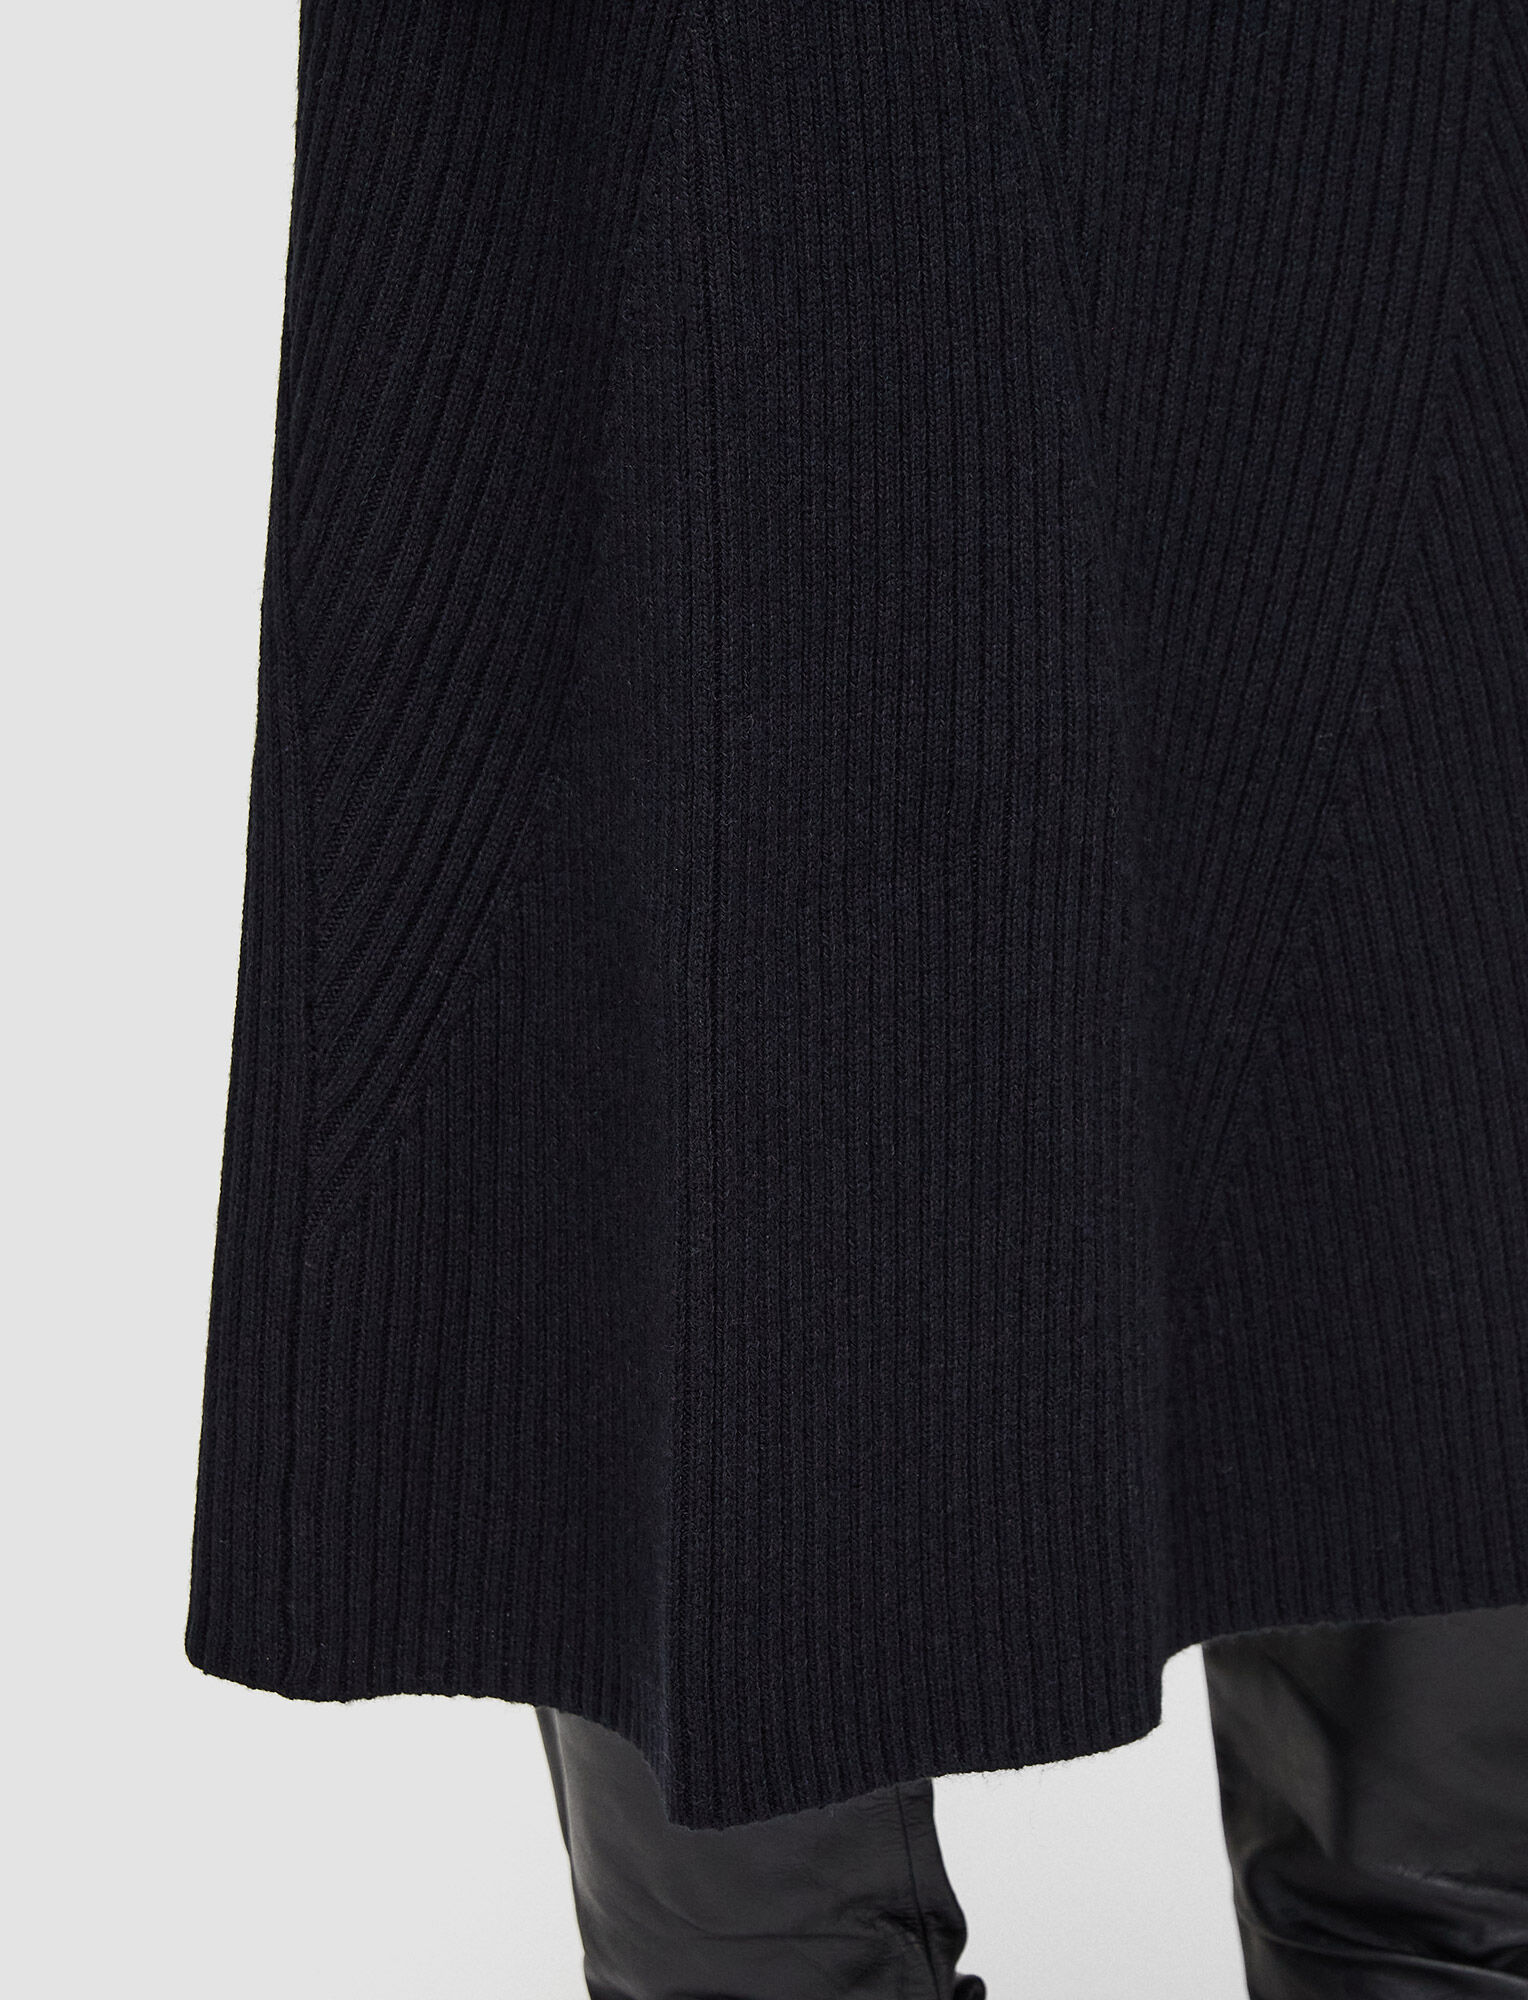 Joseph, Luxe Cardigan Stitch Skirt, in Black